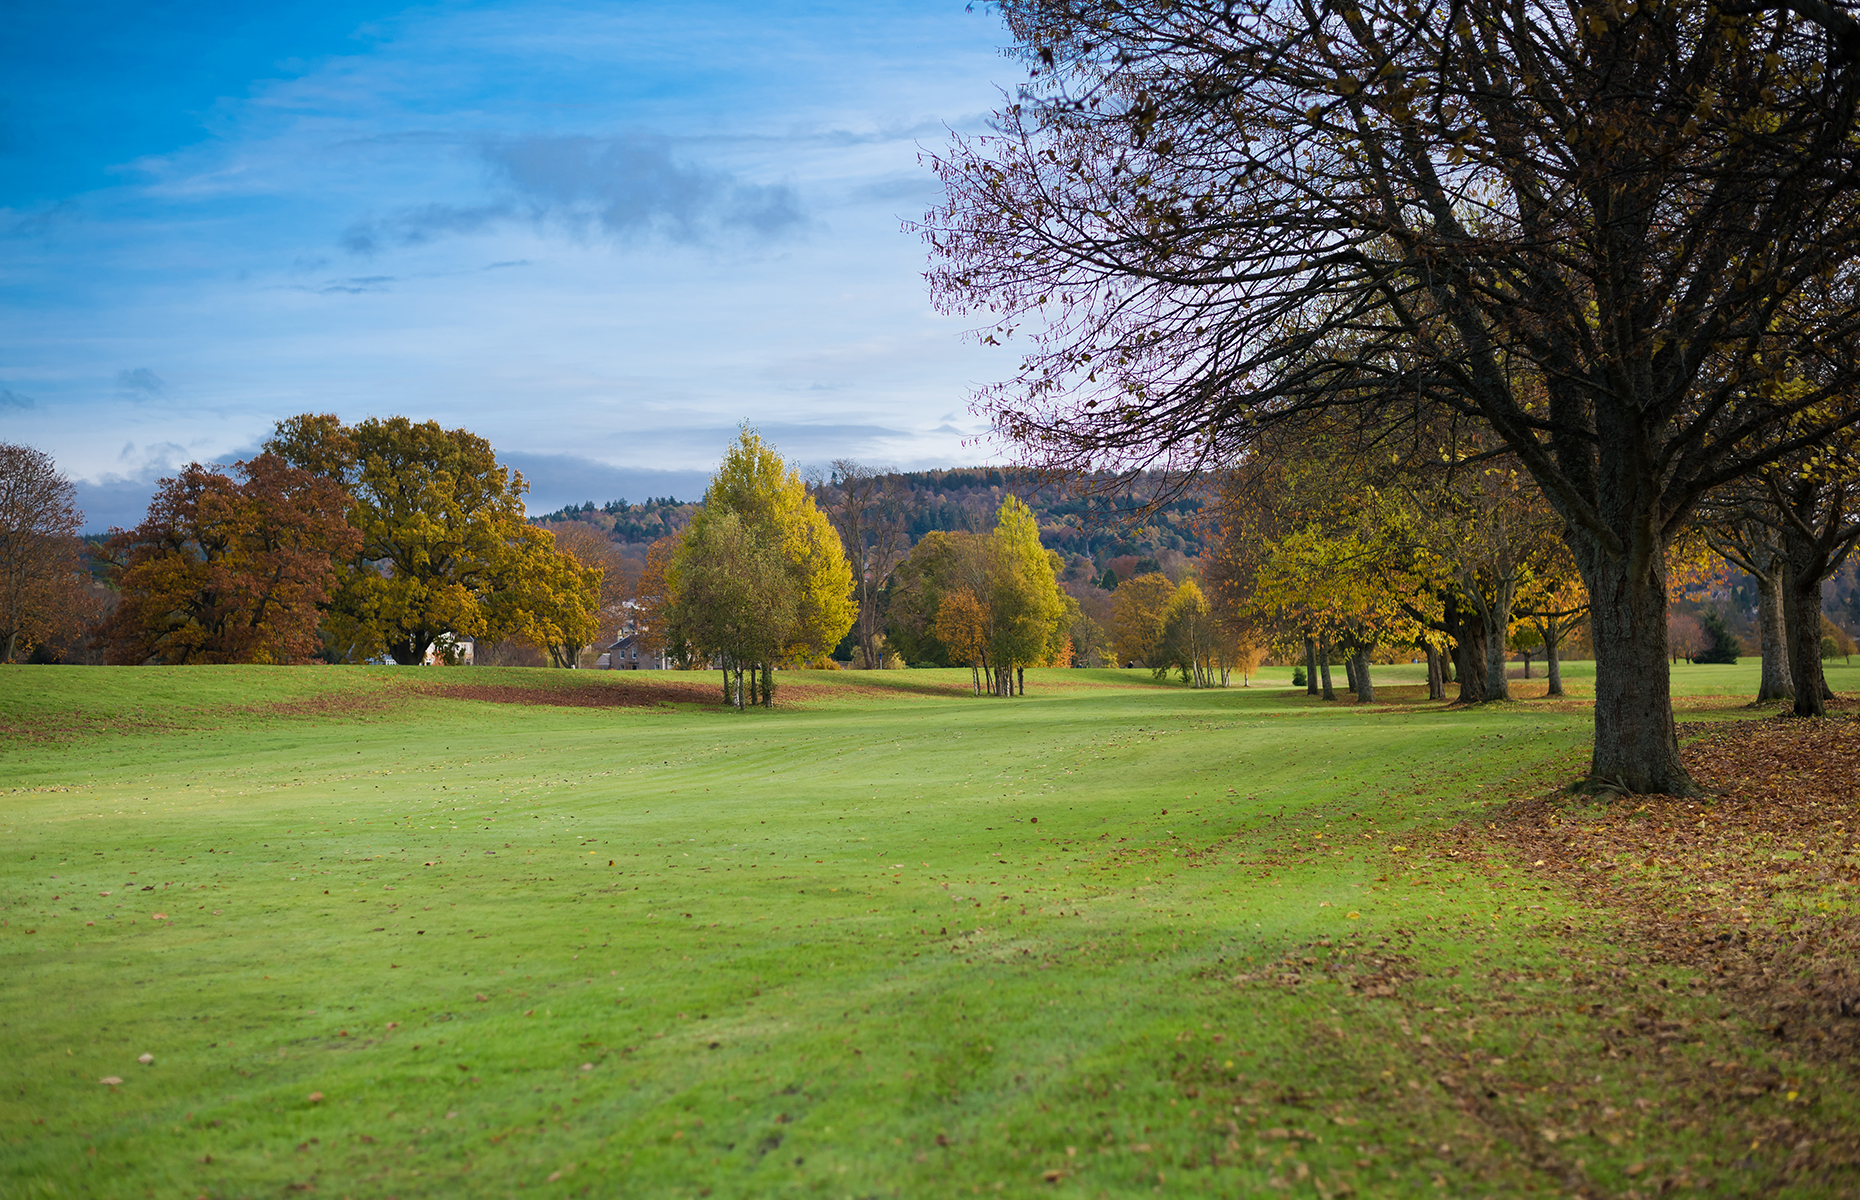 North Inch Park, Perth, Scotland. (Image: Skye Studio LK/Shutterstock)